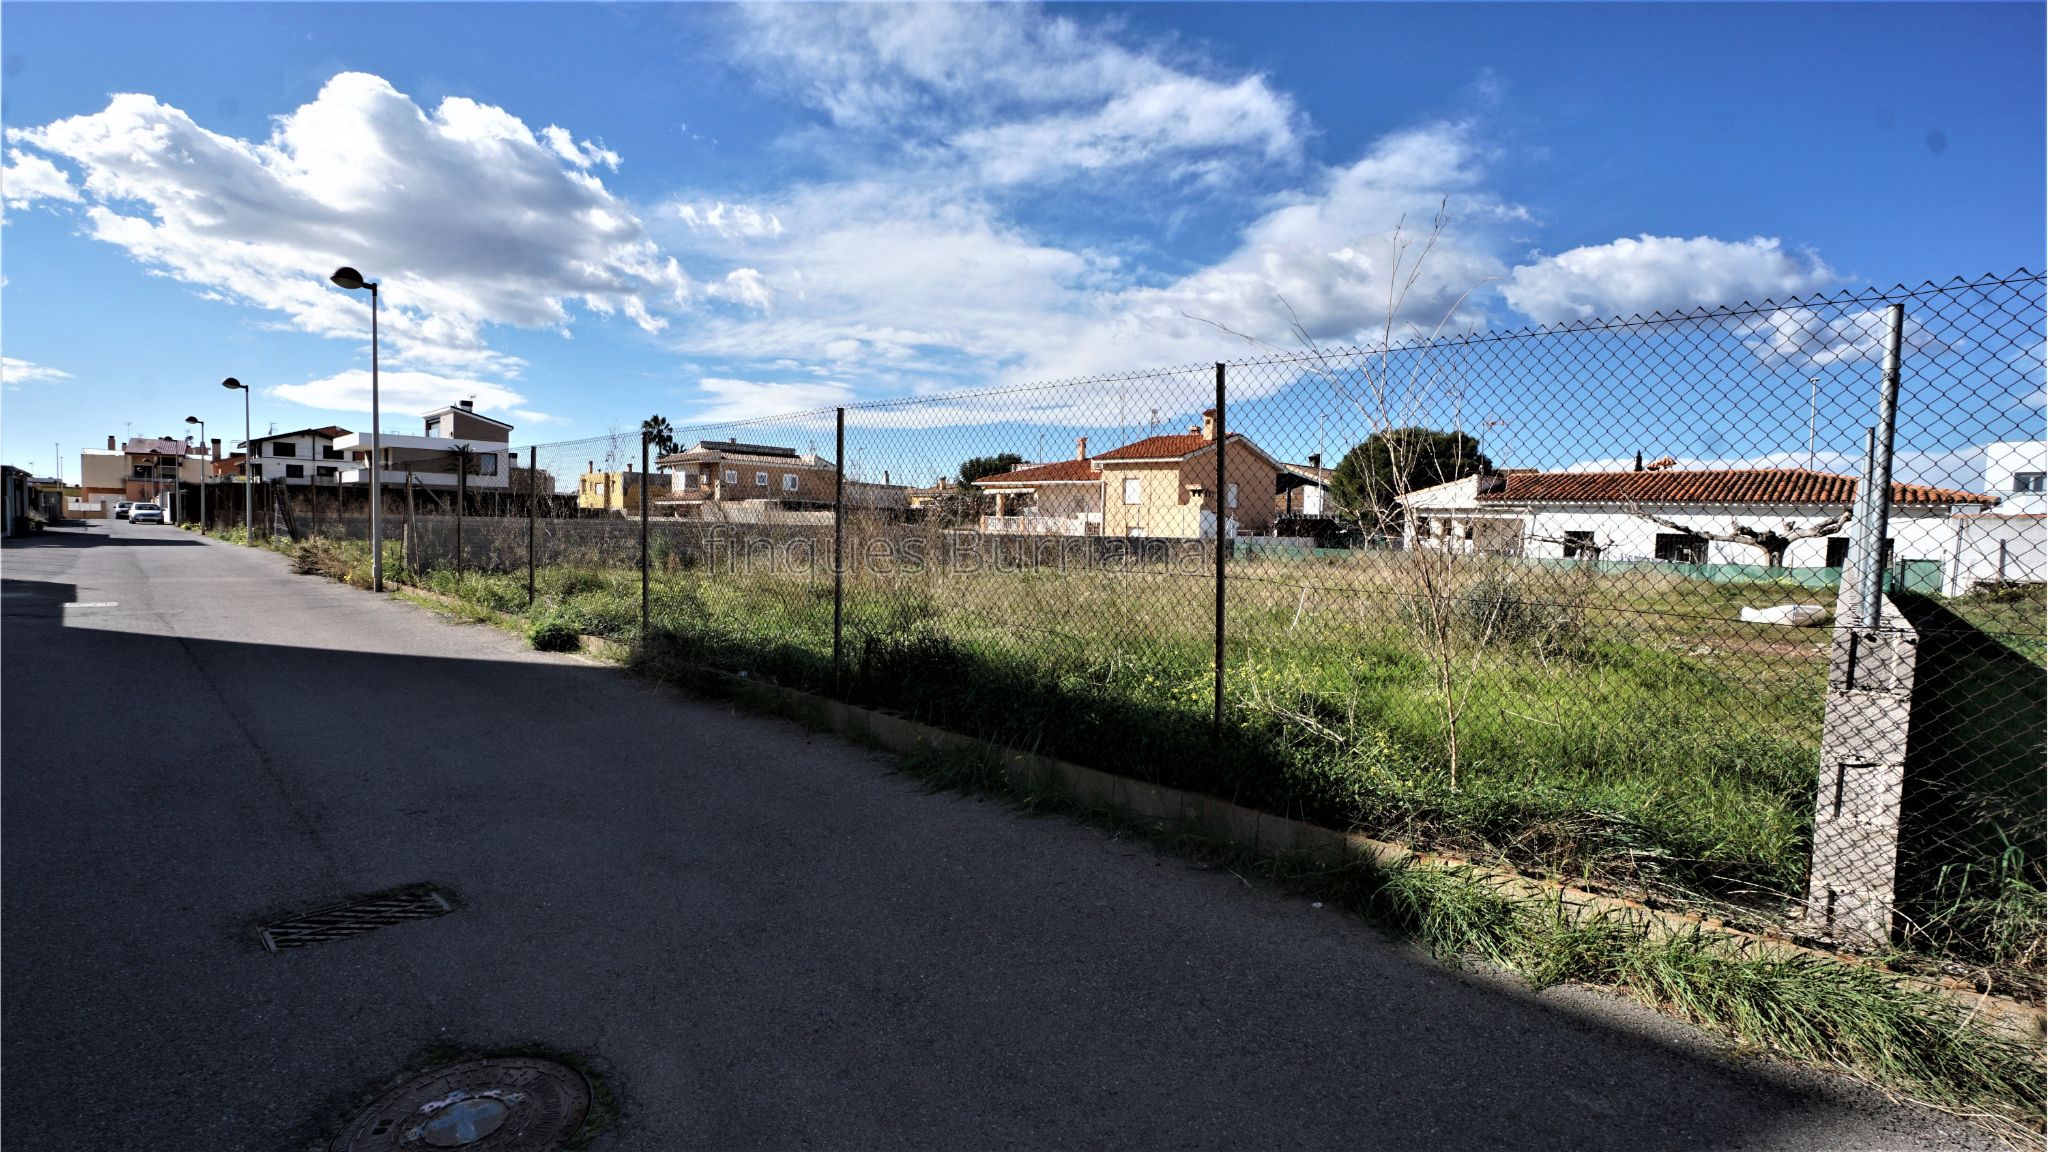 Parcela unifamiliar aislada en venta en Burriana (Castellón) en zona Serratella